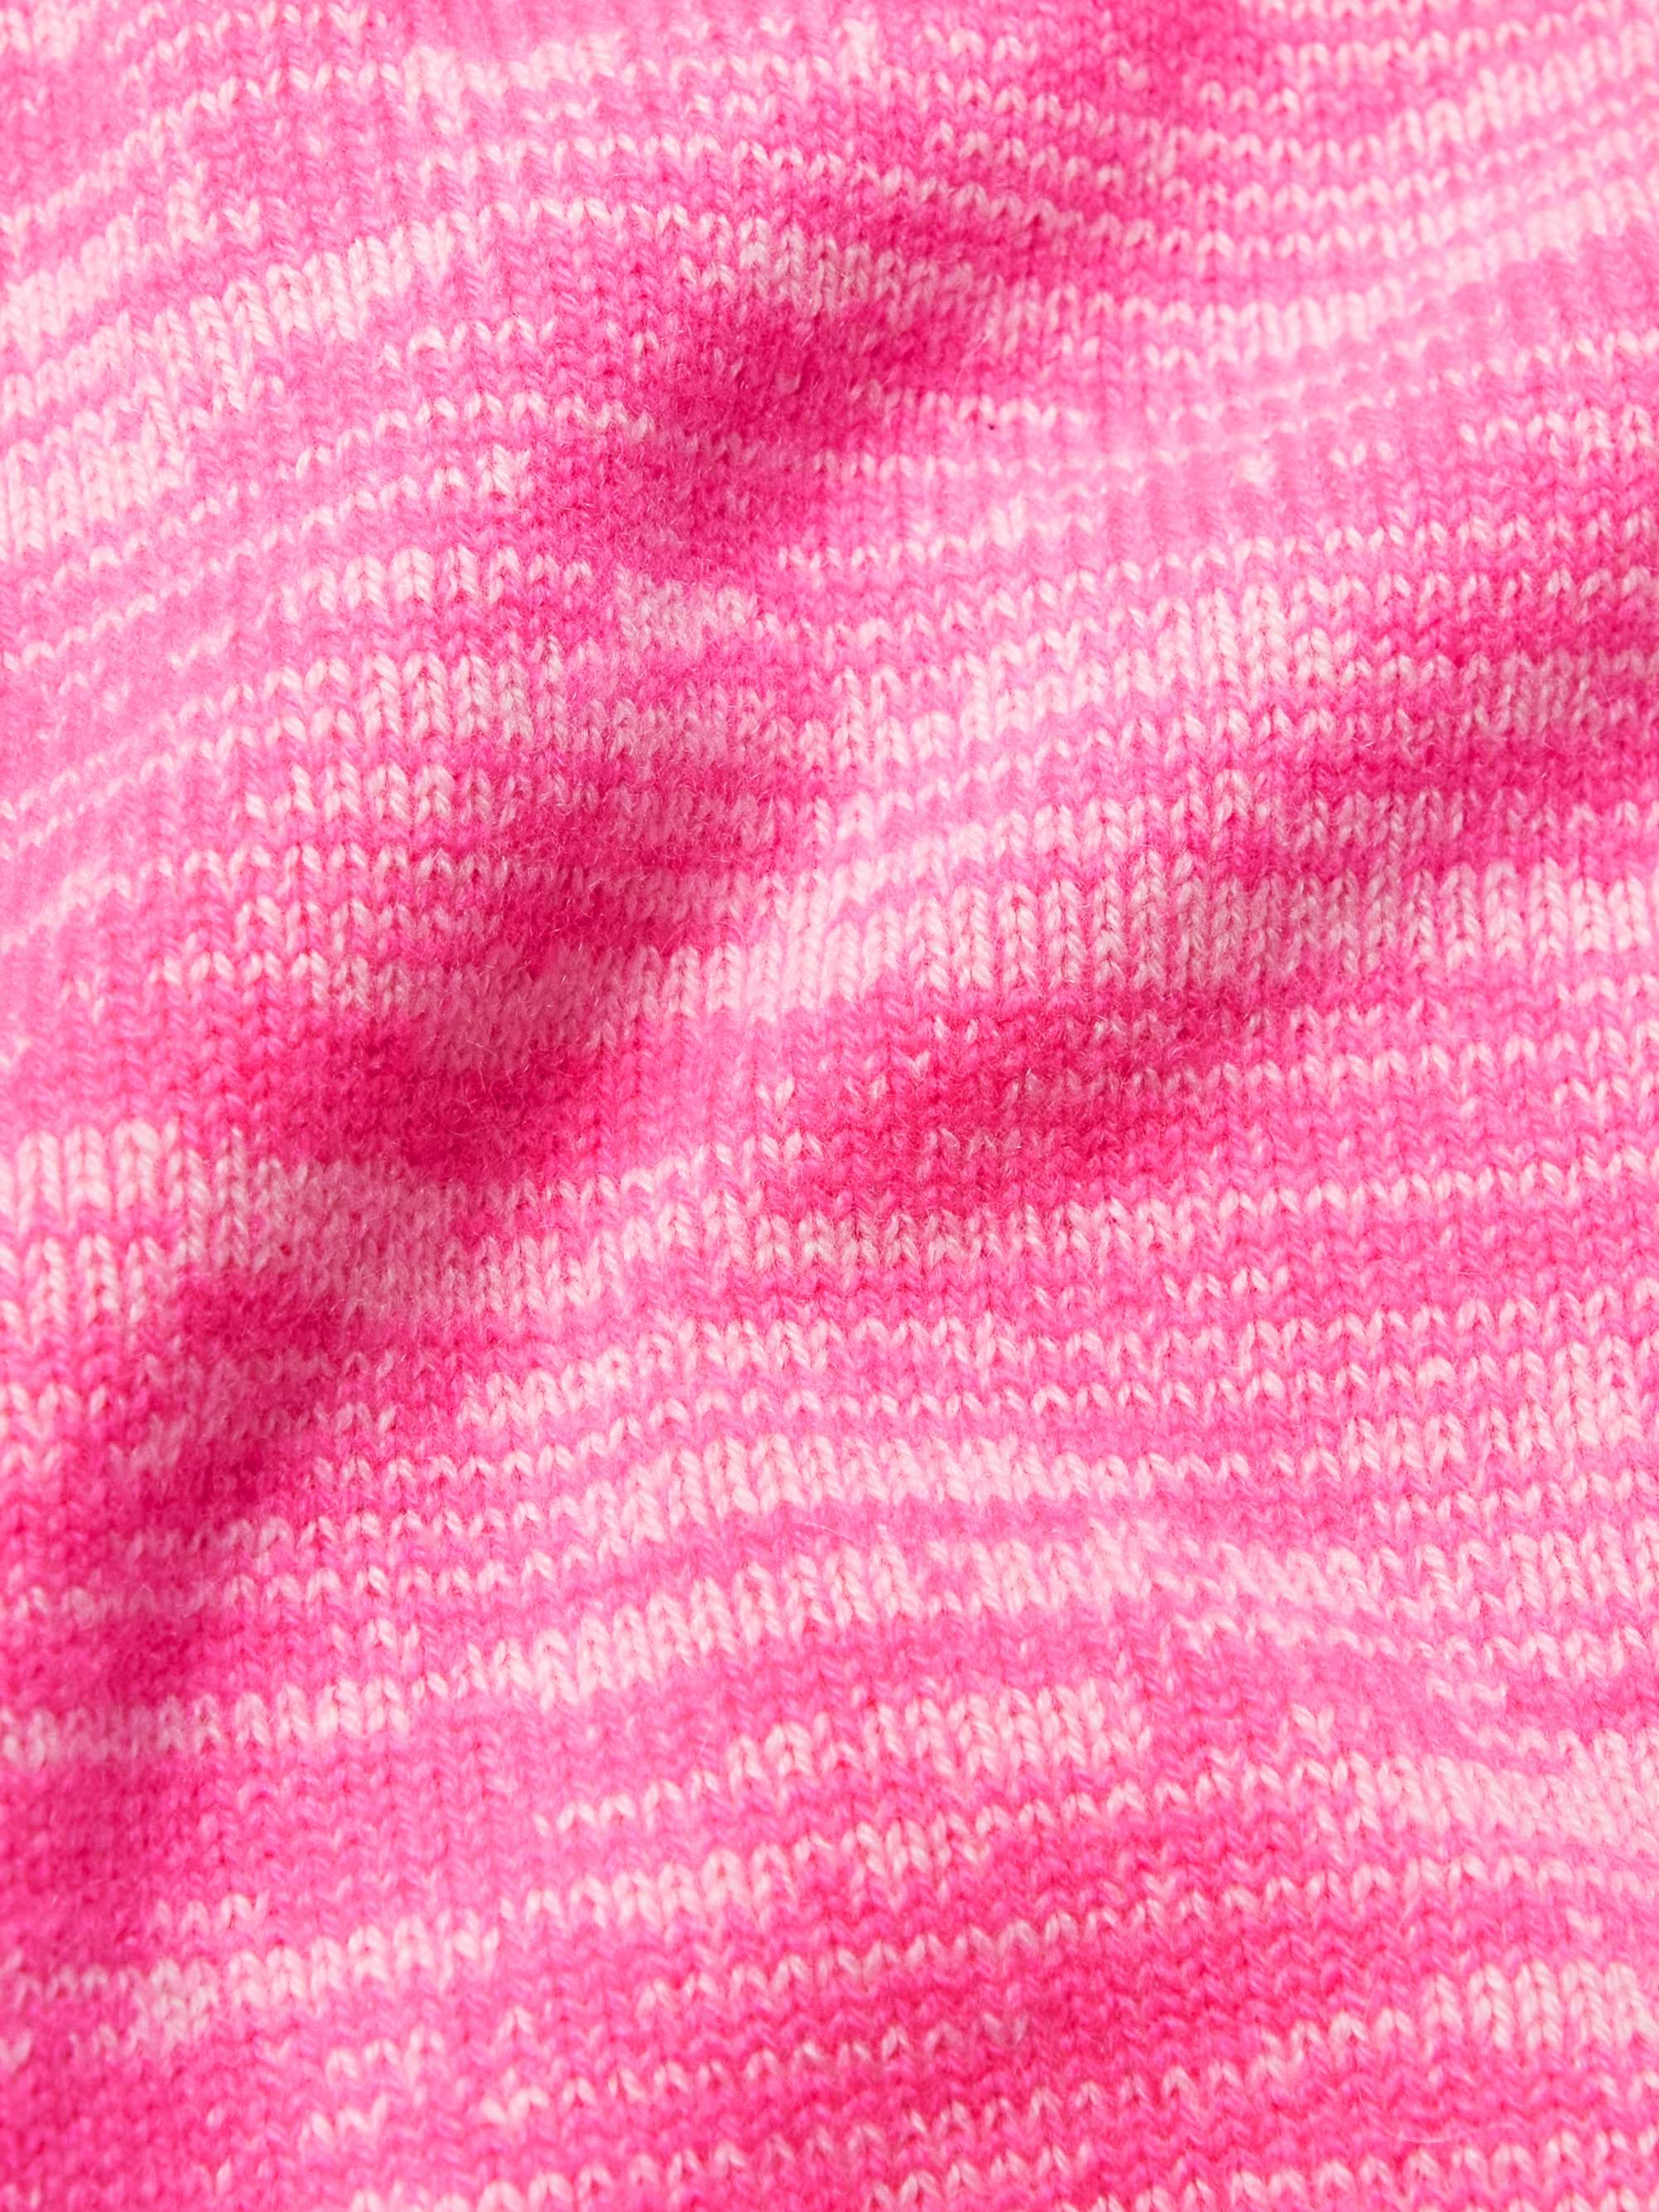 DRIES VAN NOTEN Striped Intarsia-Knit Cashmere Sweater